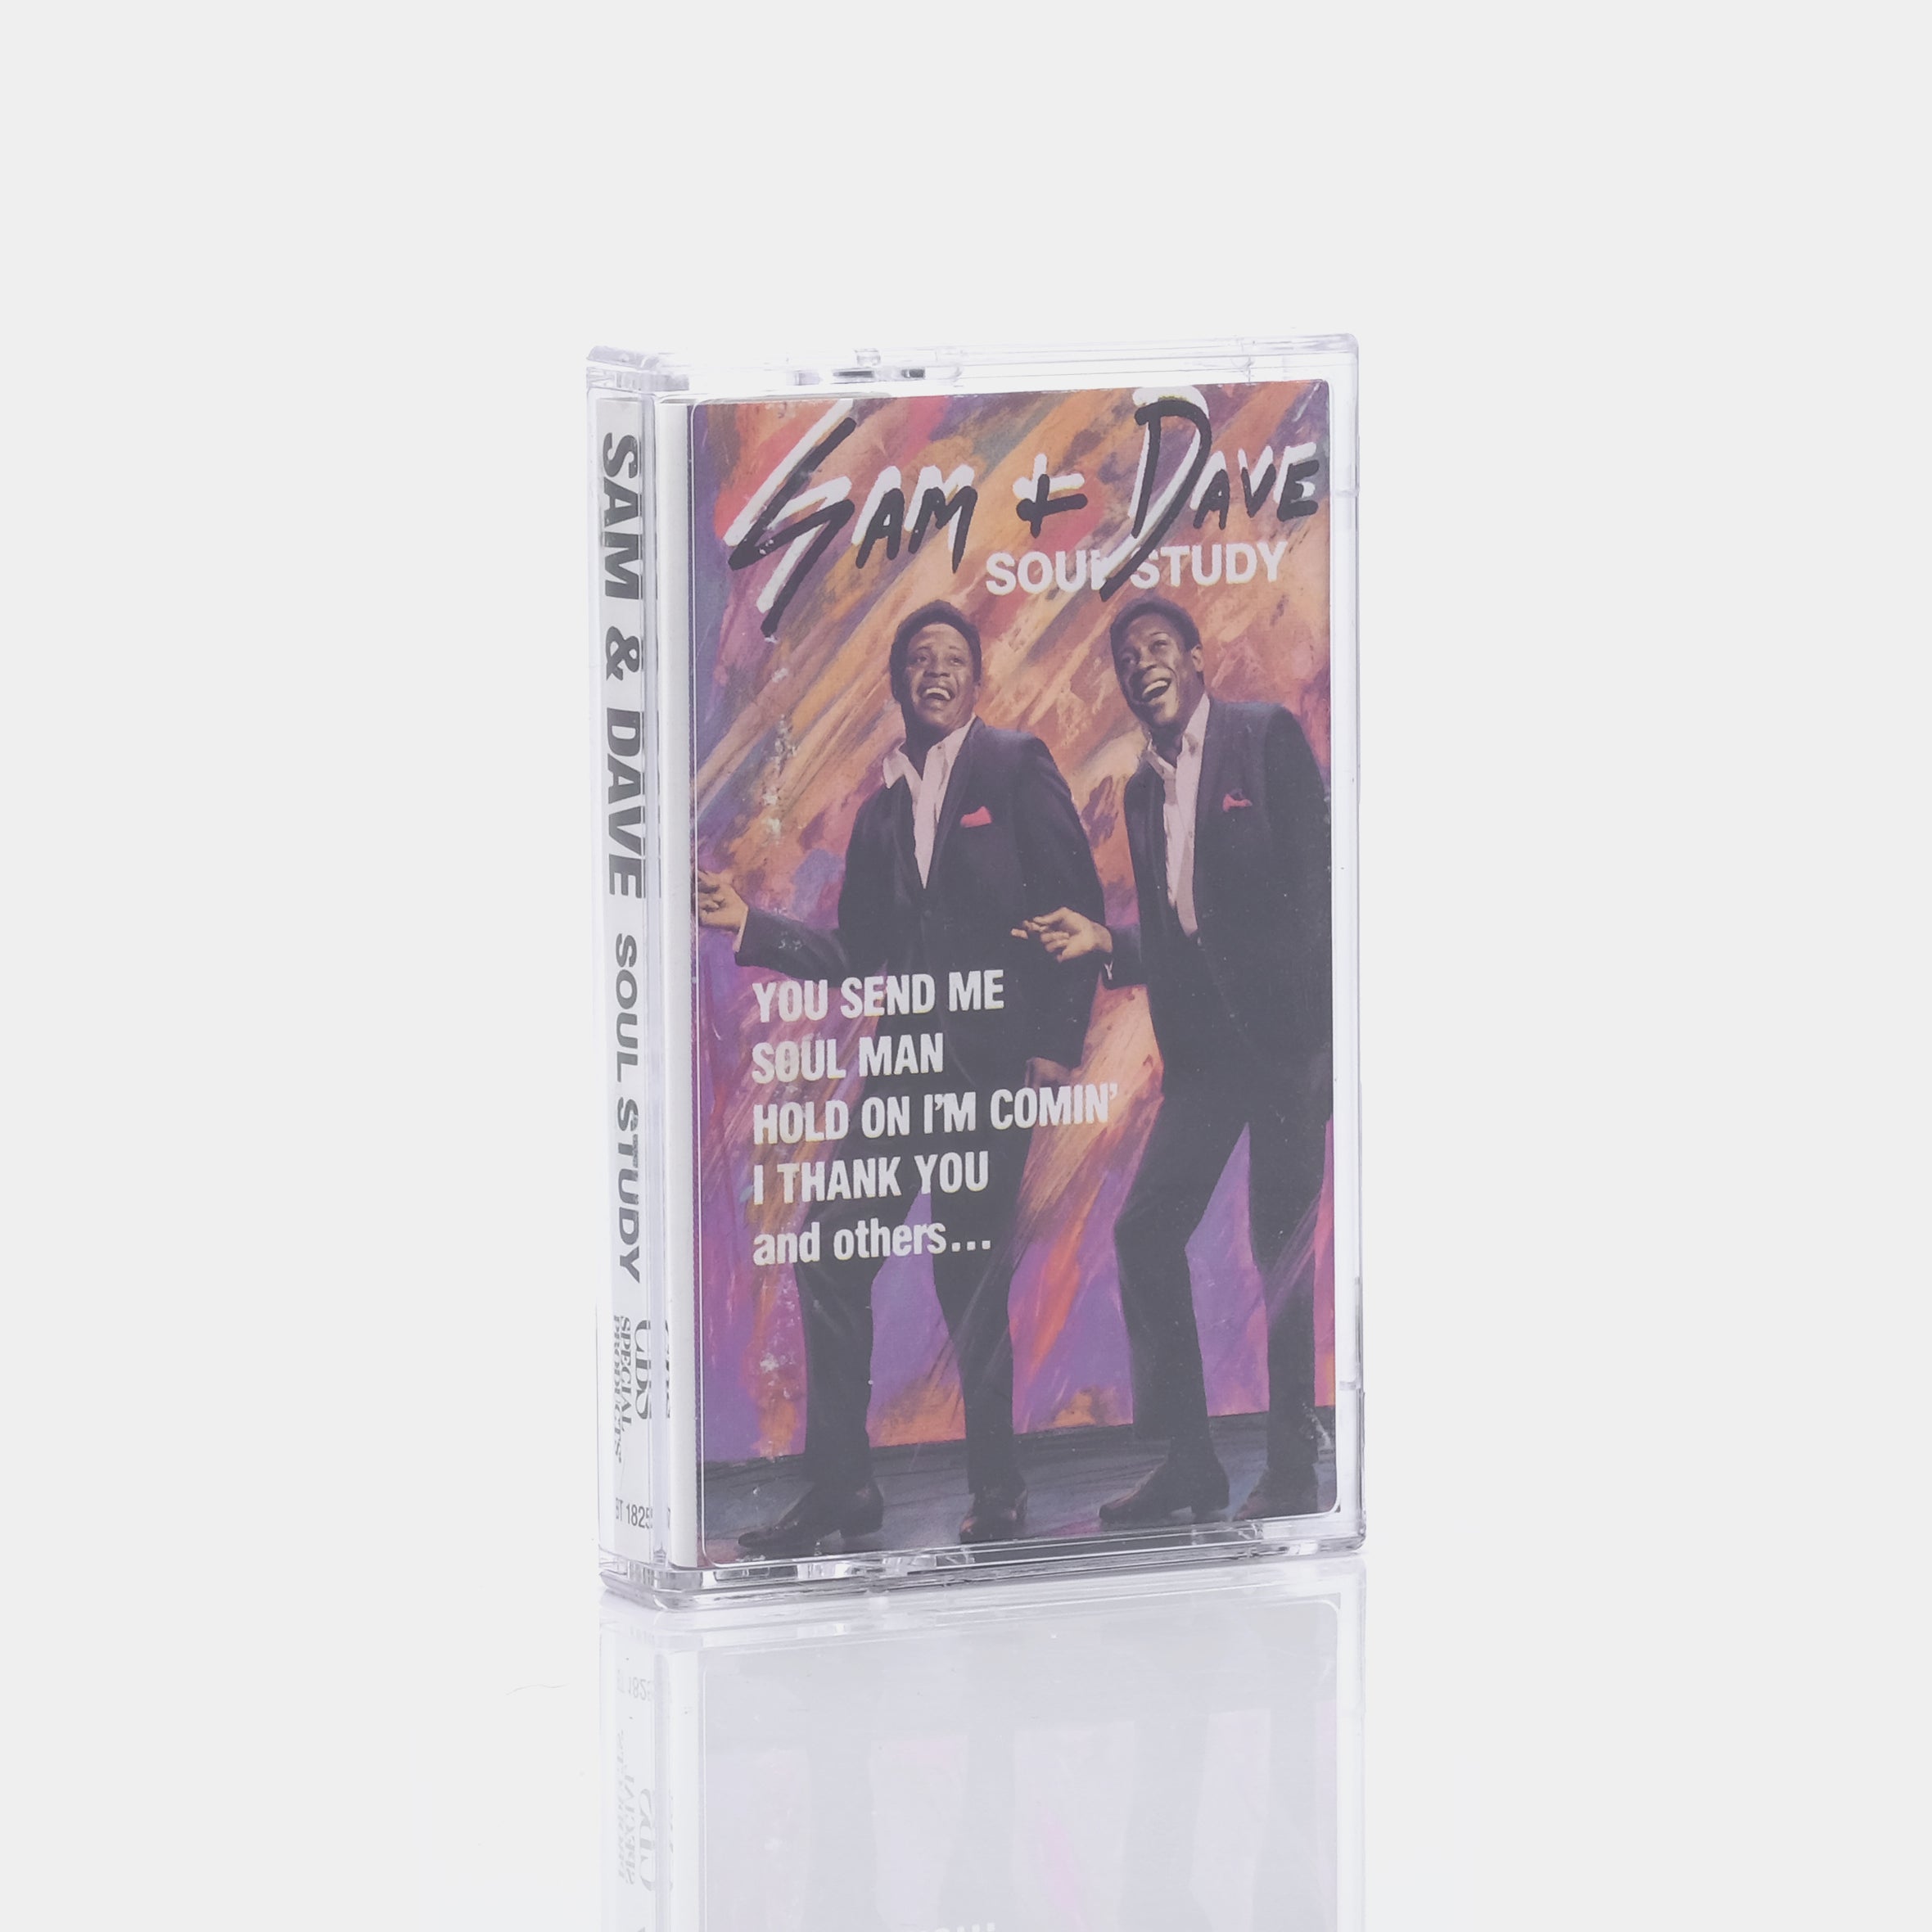 Sam & Dave - Soul Study Cassette Tape